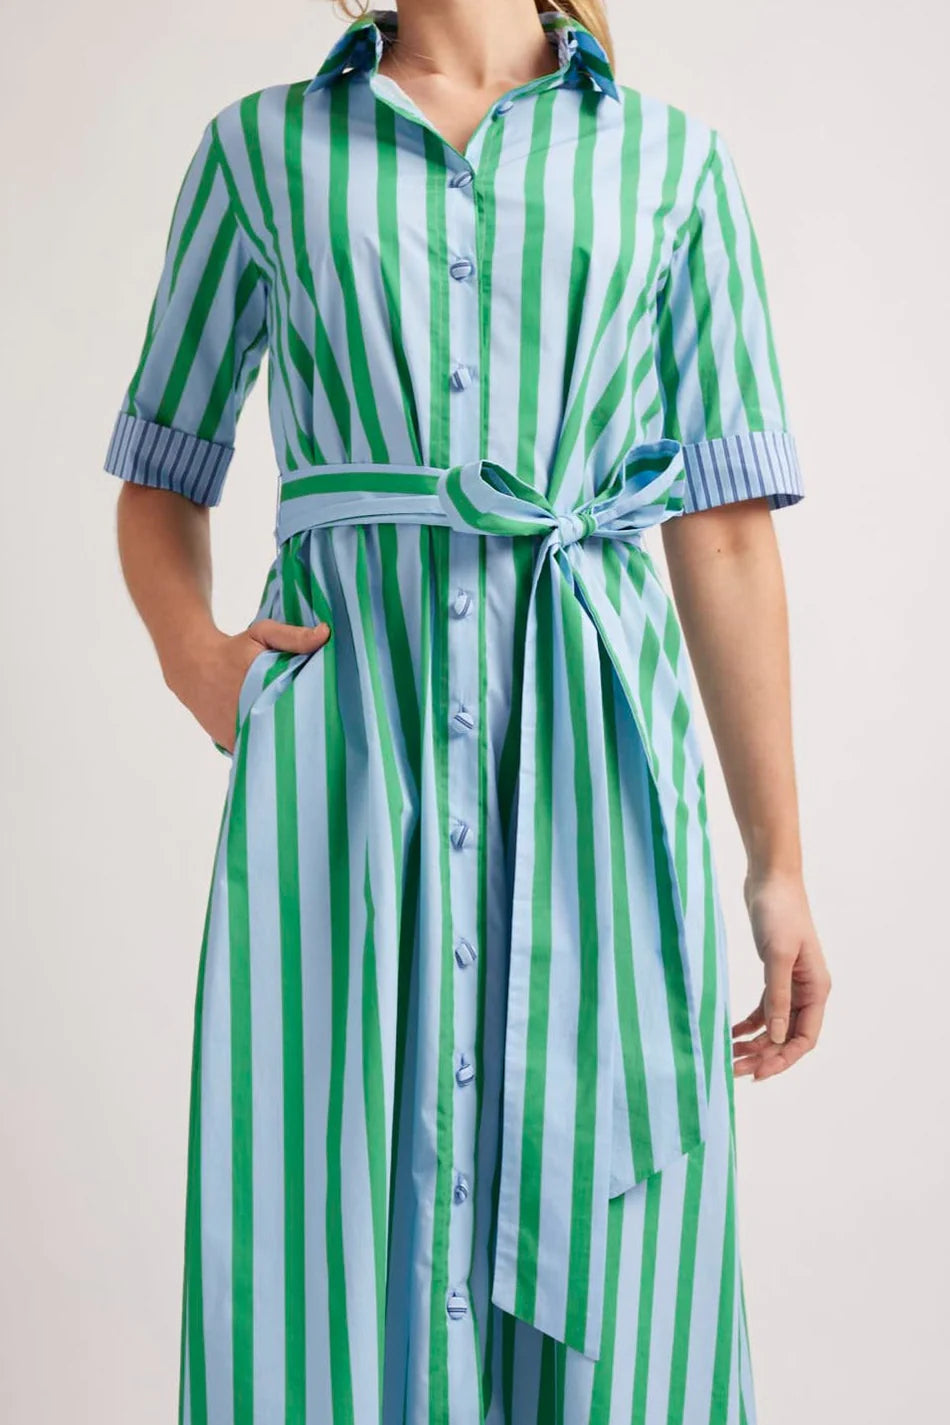 Tartufo Dress - Parasol - Blue Stripe Dresses Alessandra   